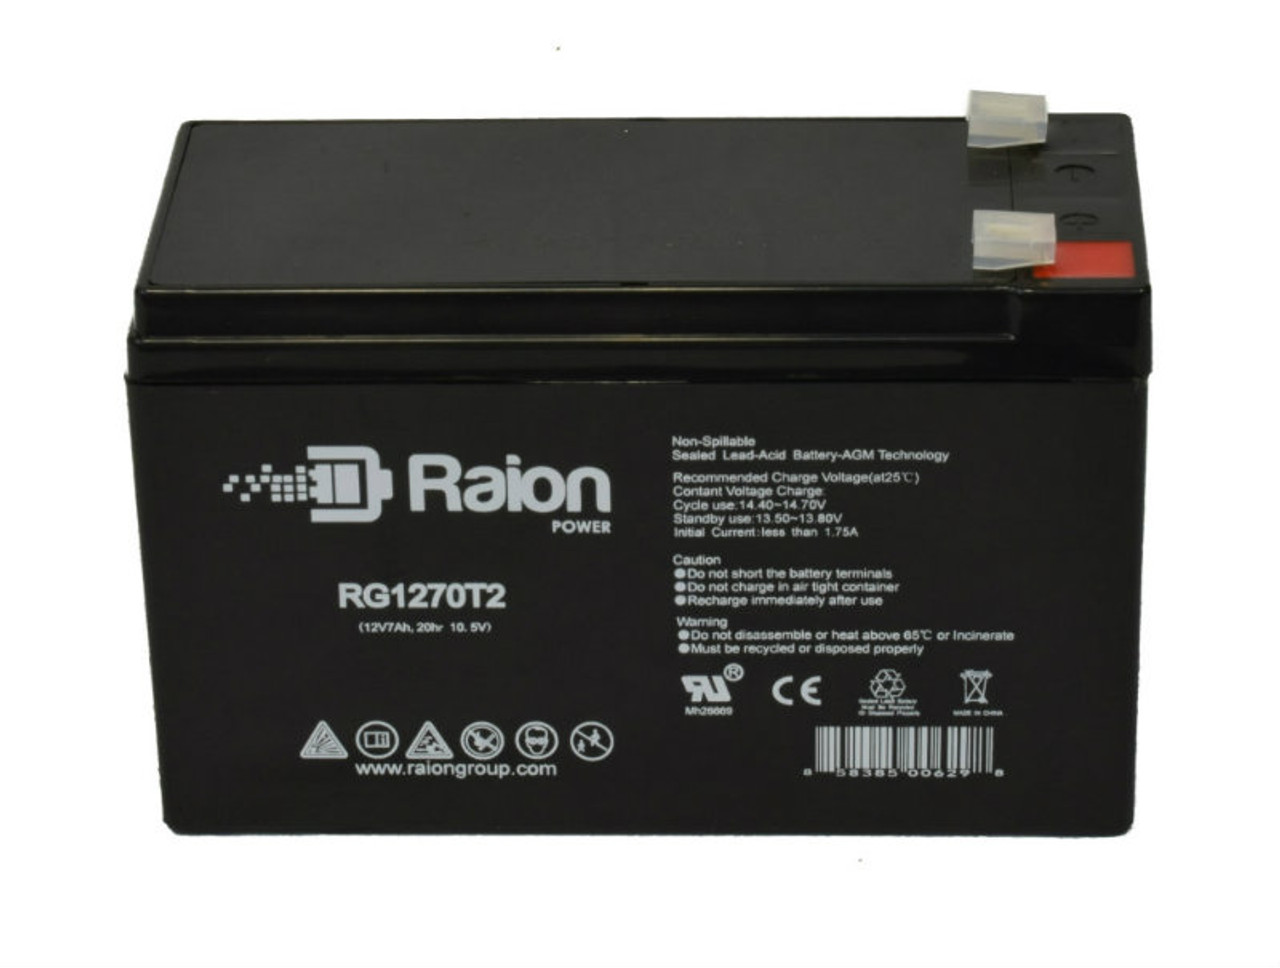 Raion Power RG1270T1 12V 7Ah Lead Acid Battery for Amptek AT12-7.6